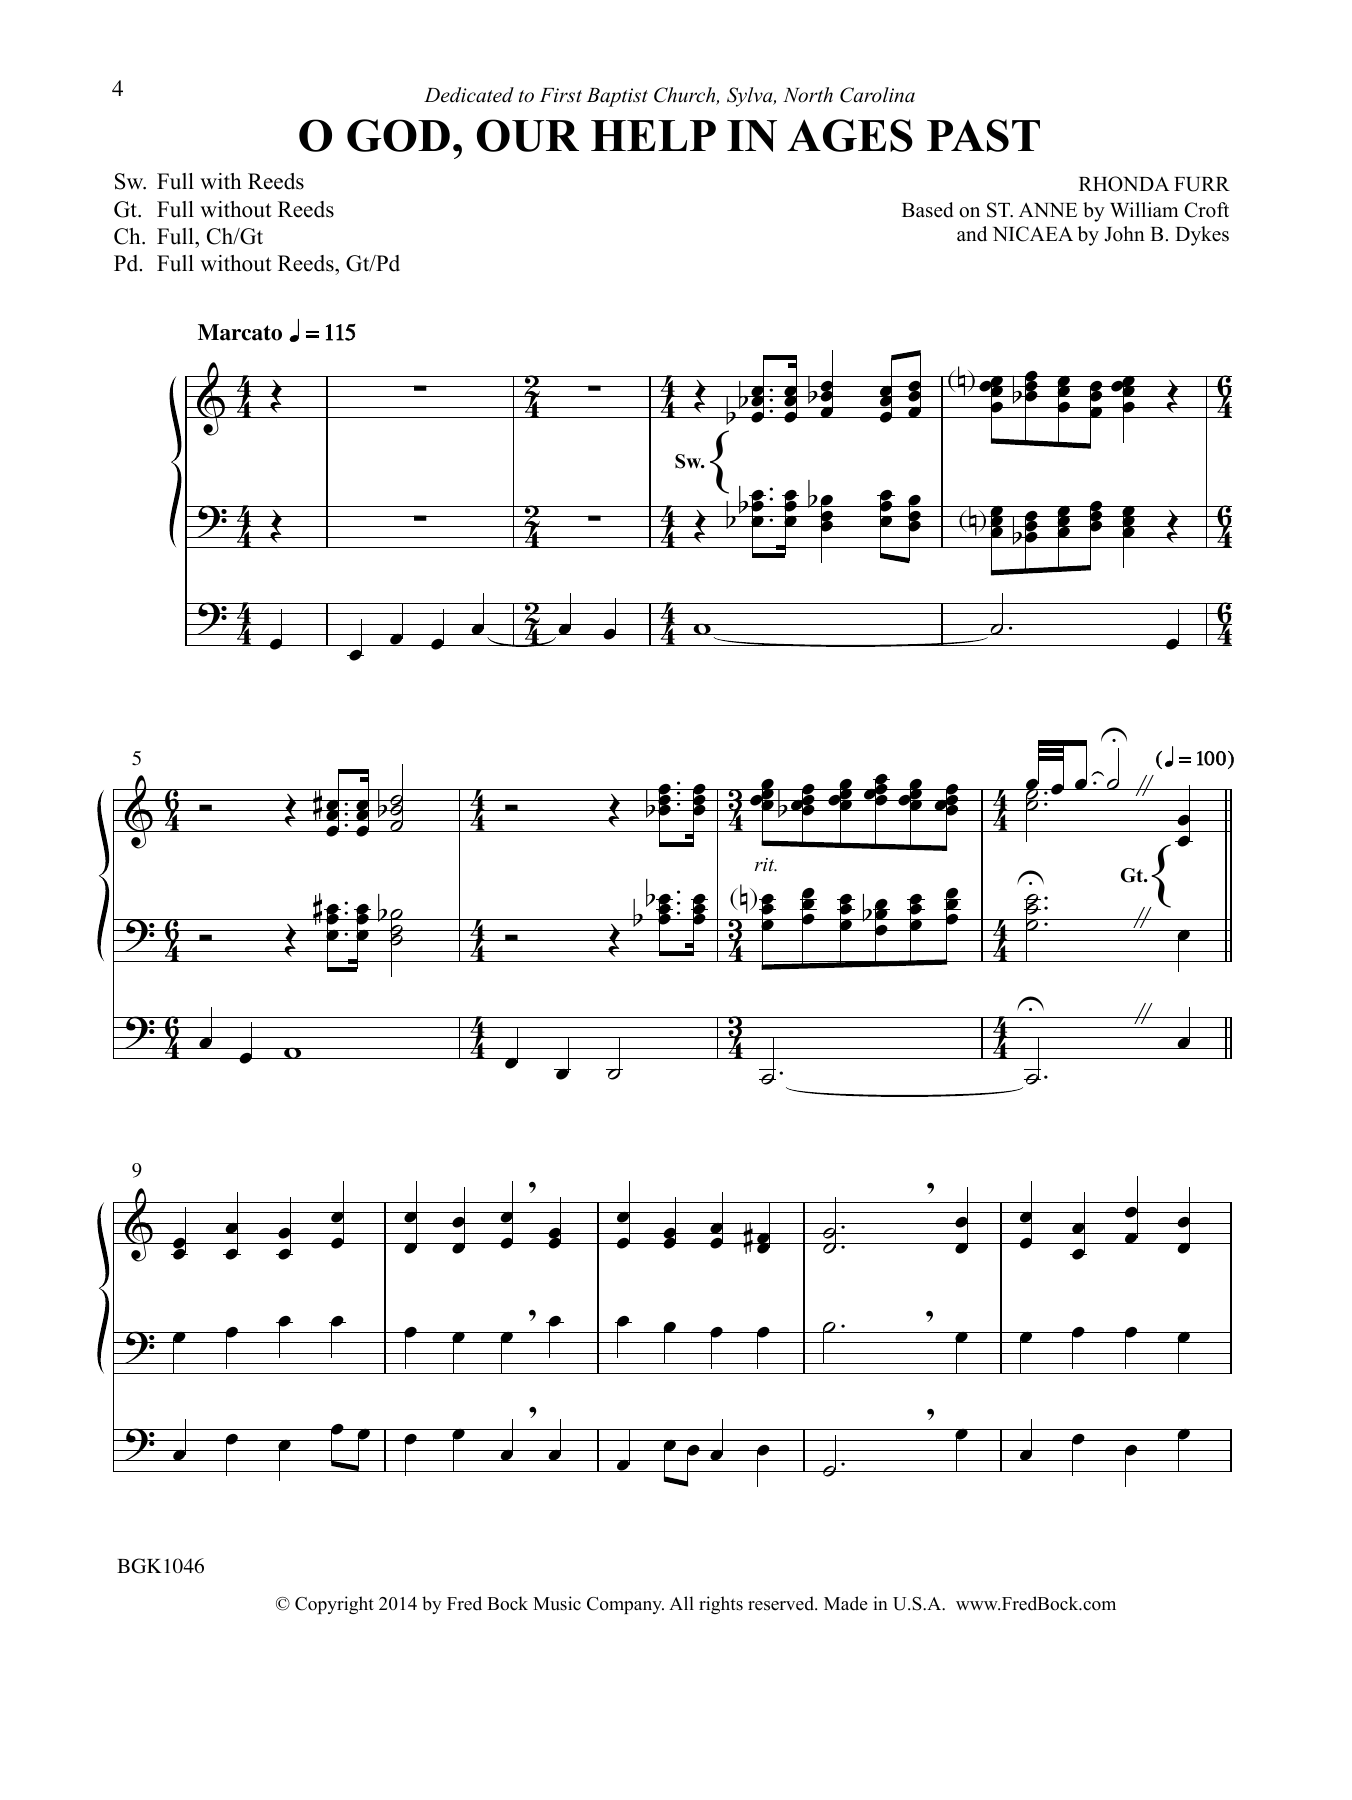 Rhonda Furr Be Thou My Vision Sheet Music Notes & Chords for Organ - Download or Print PDF